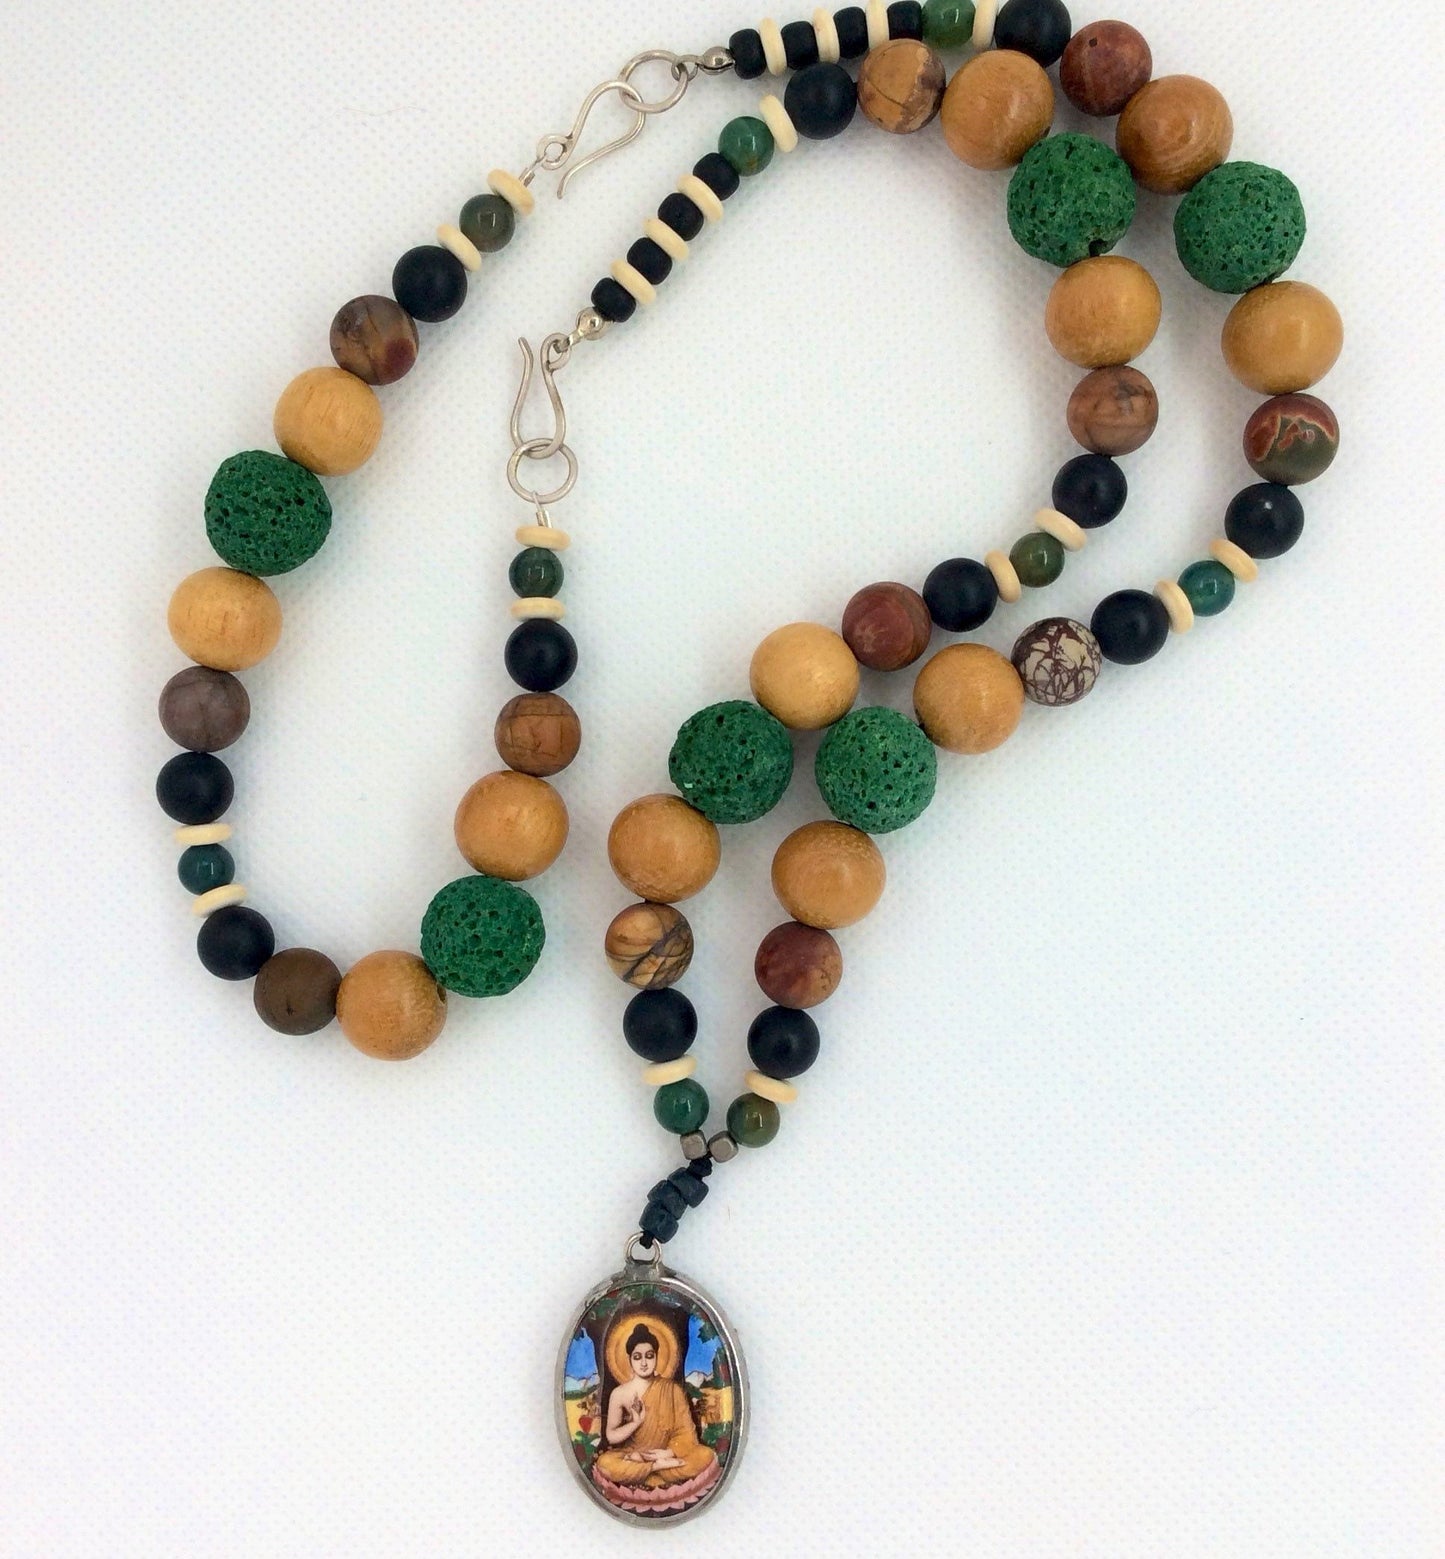 Charm necklace - beaded choker with Buddha charm - boho jewelry set - spiritual statement necklace and bracelet - meditation yoga lifestyle